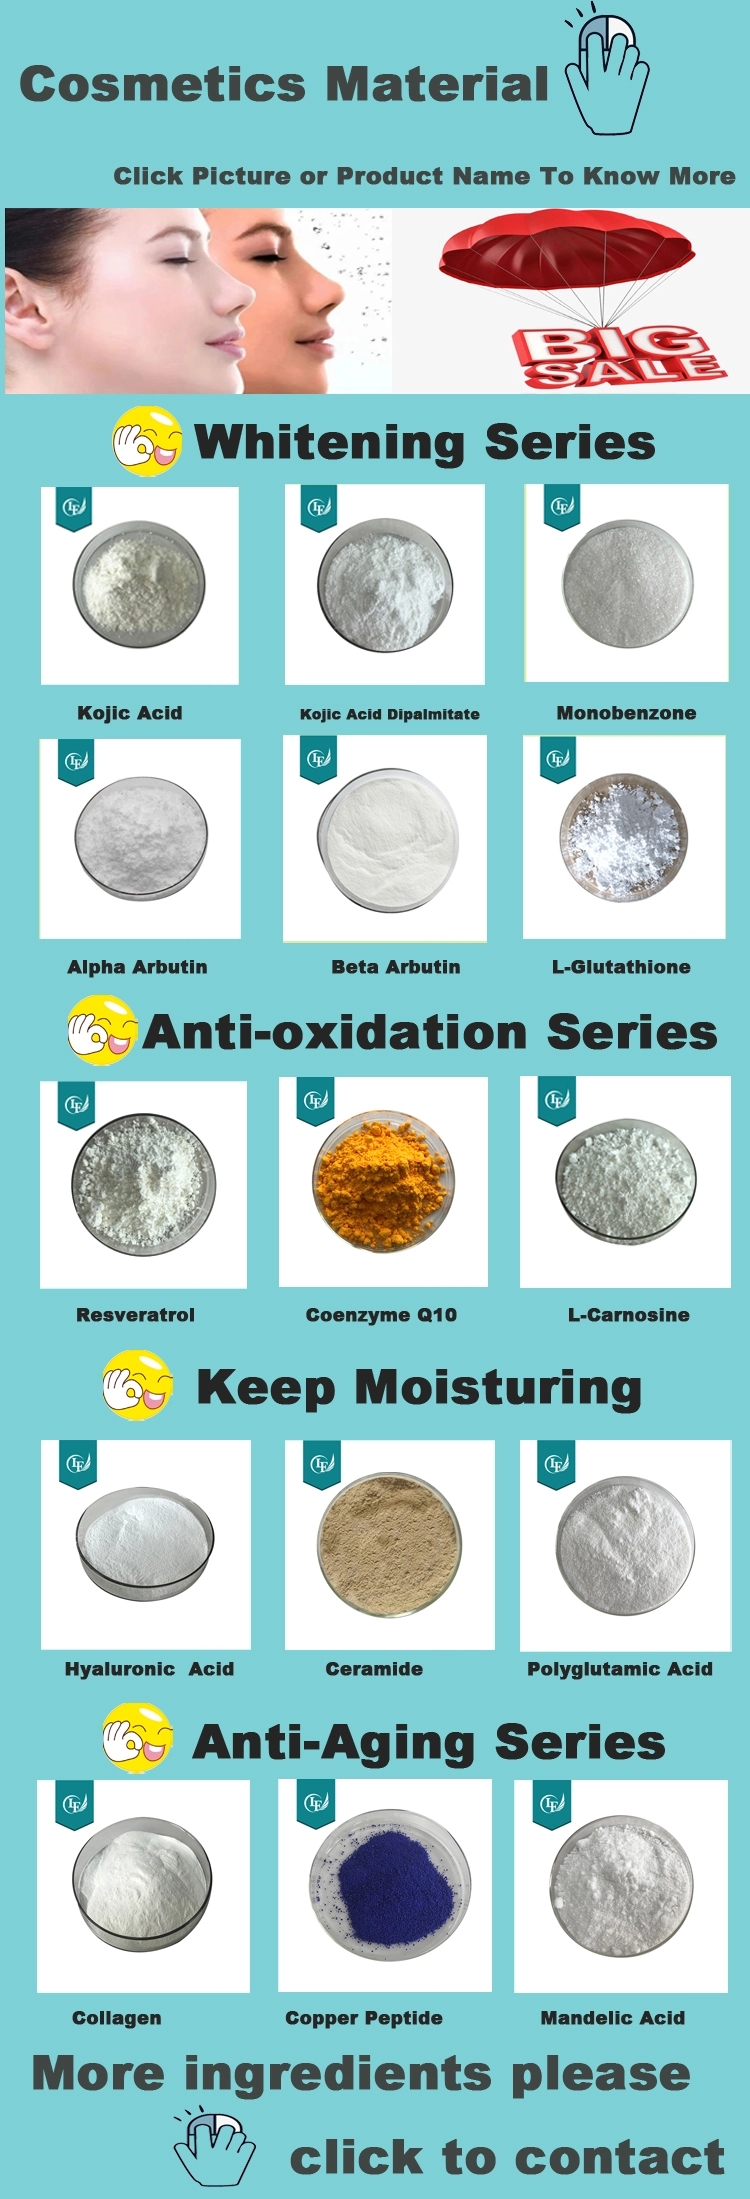 kojic acid powder skin lightening related products-Lyphar